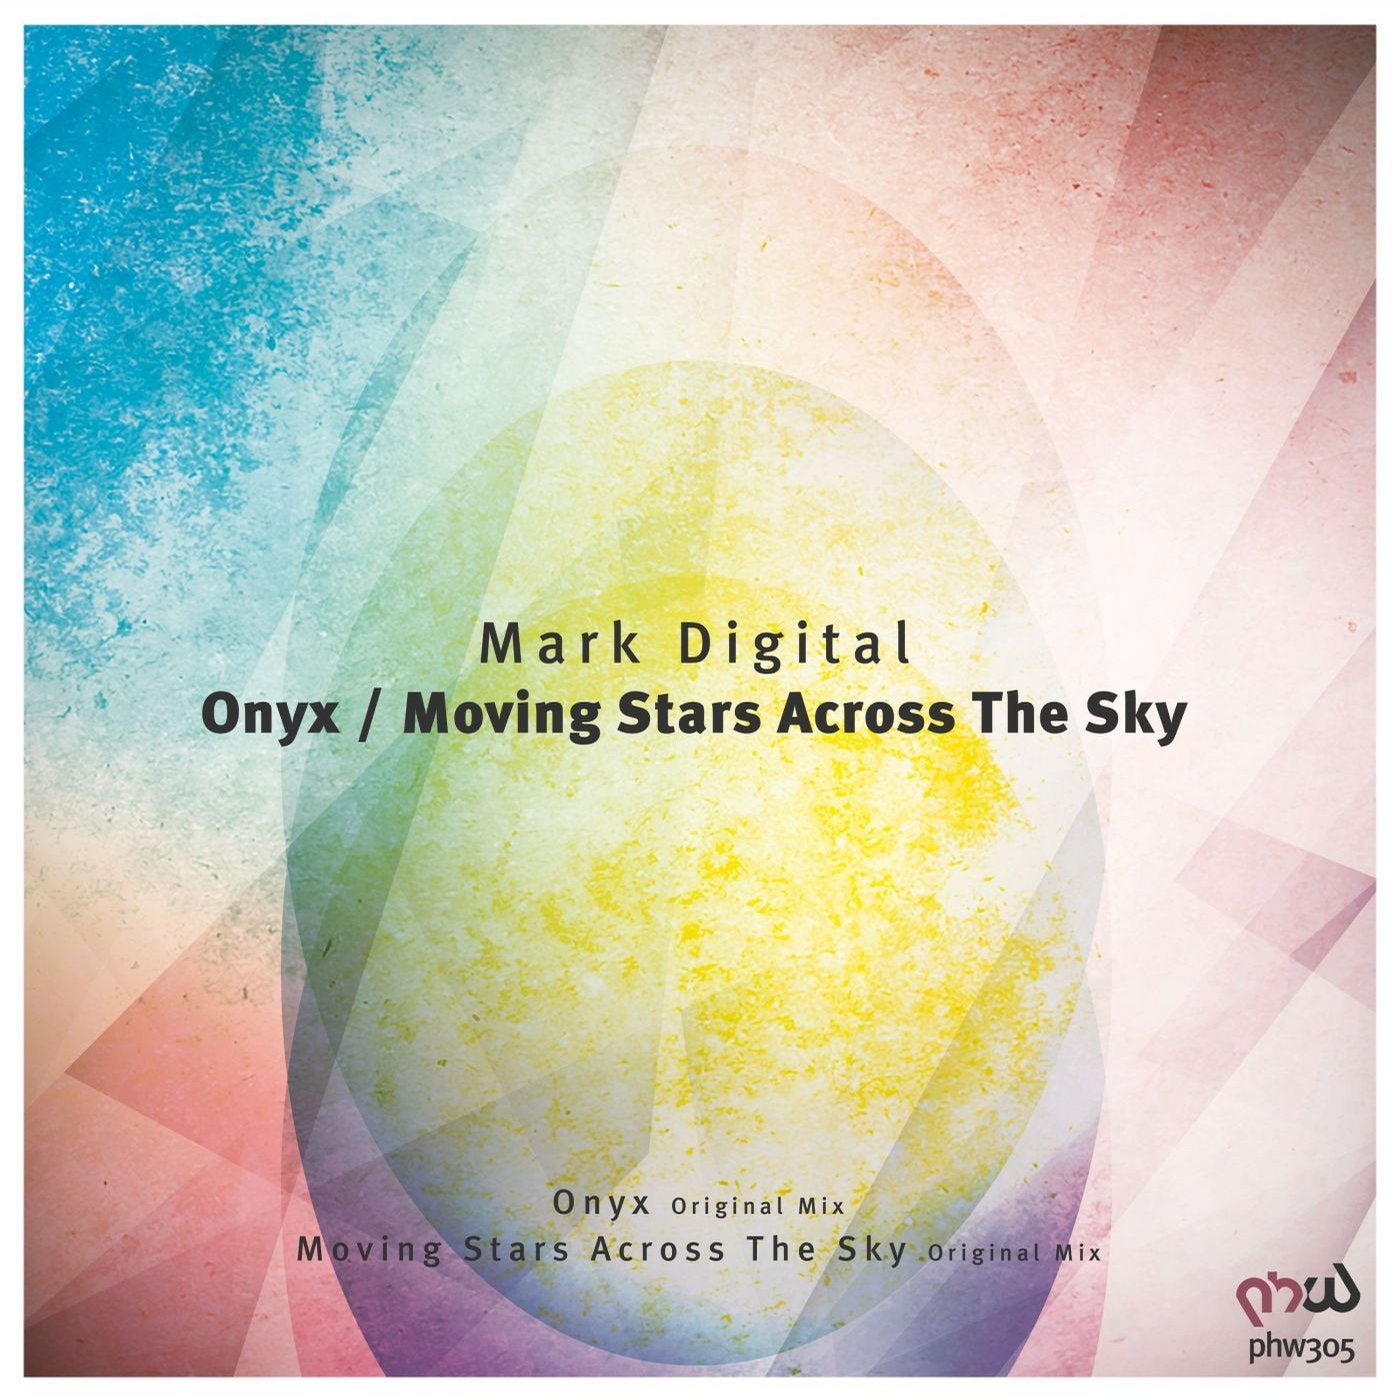 Onyx / Moving Stars Across the Sky